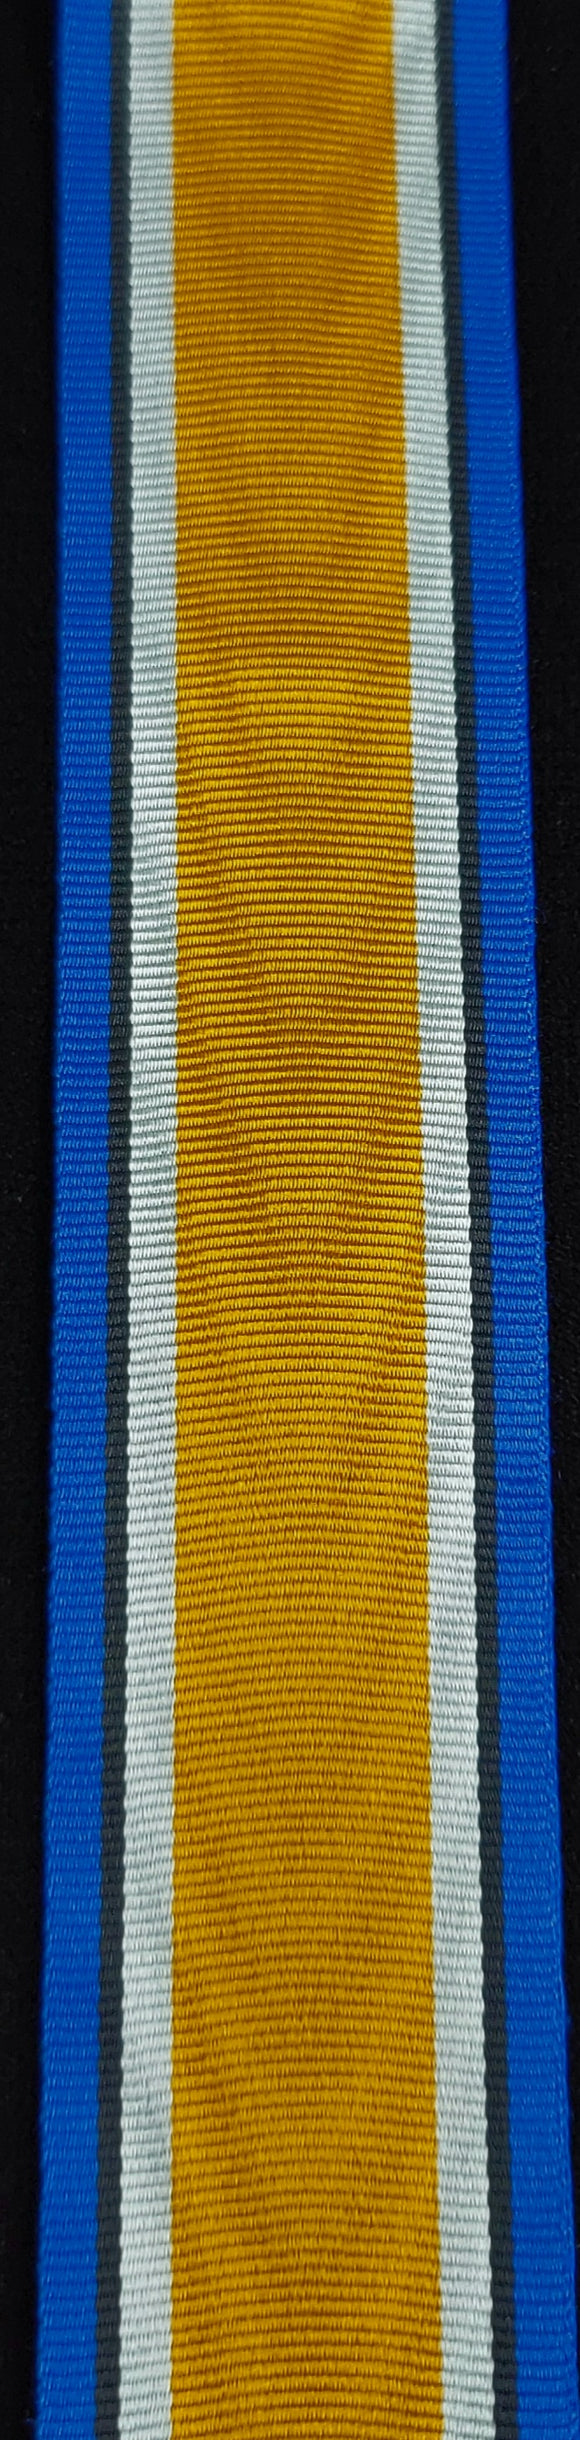 Ribbon, WW1 British War Medal